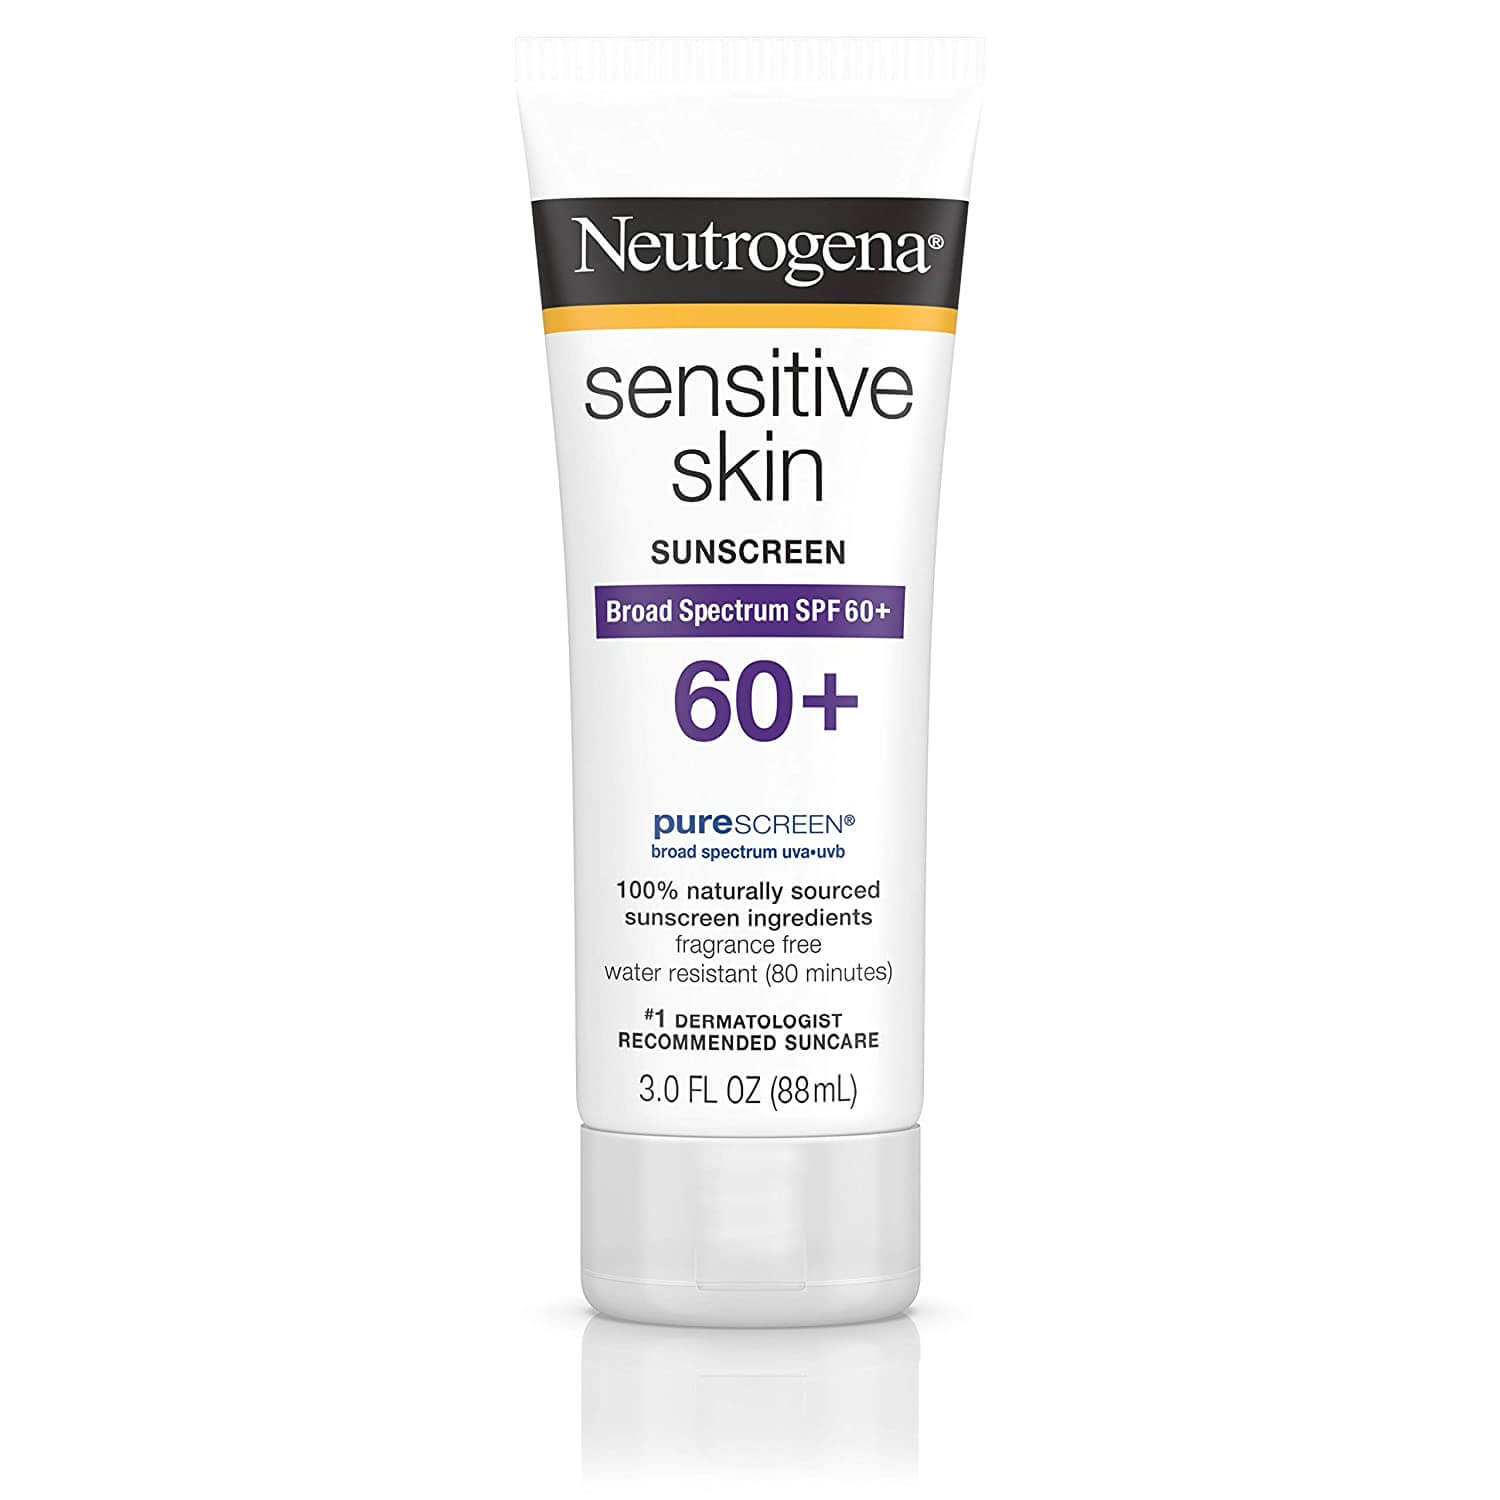 neutrogena sensitive skin sunscreen spf 60 ingredients